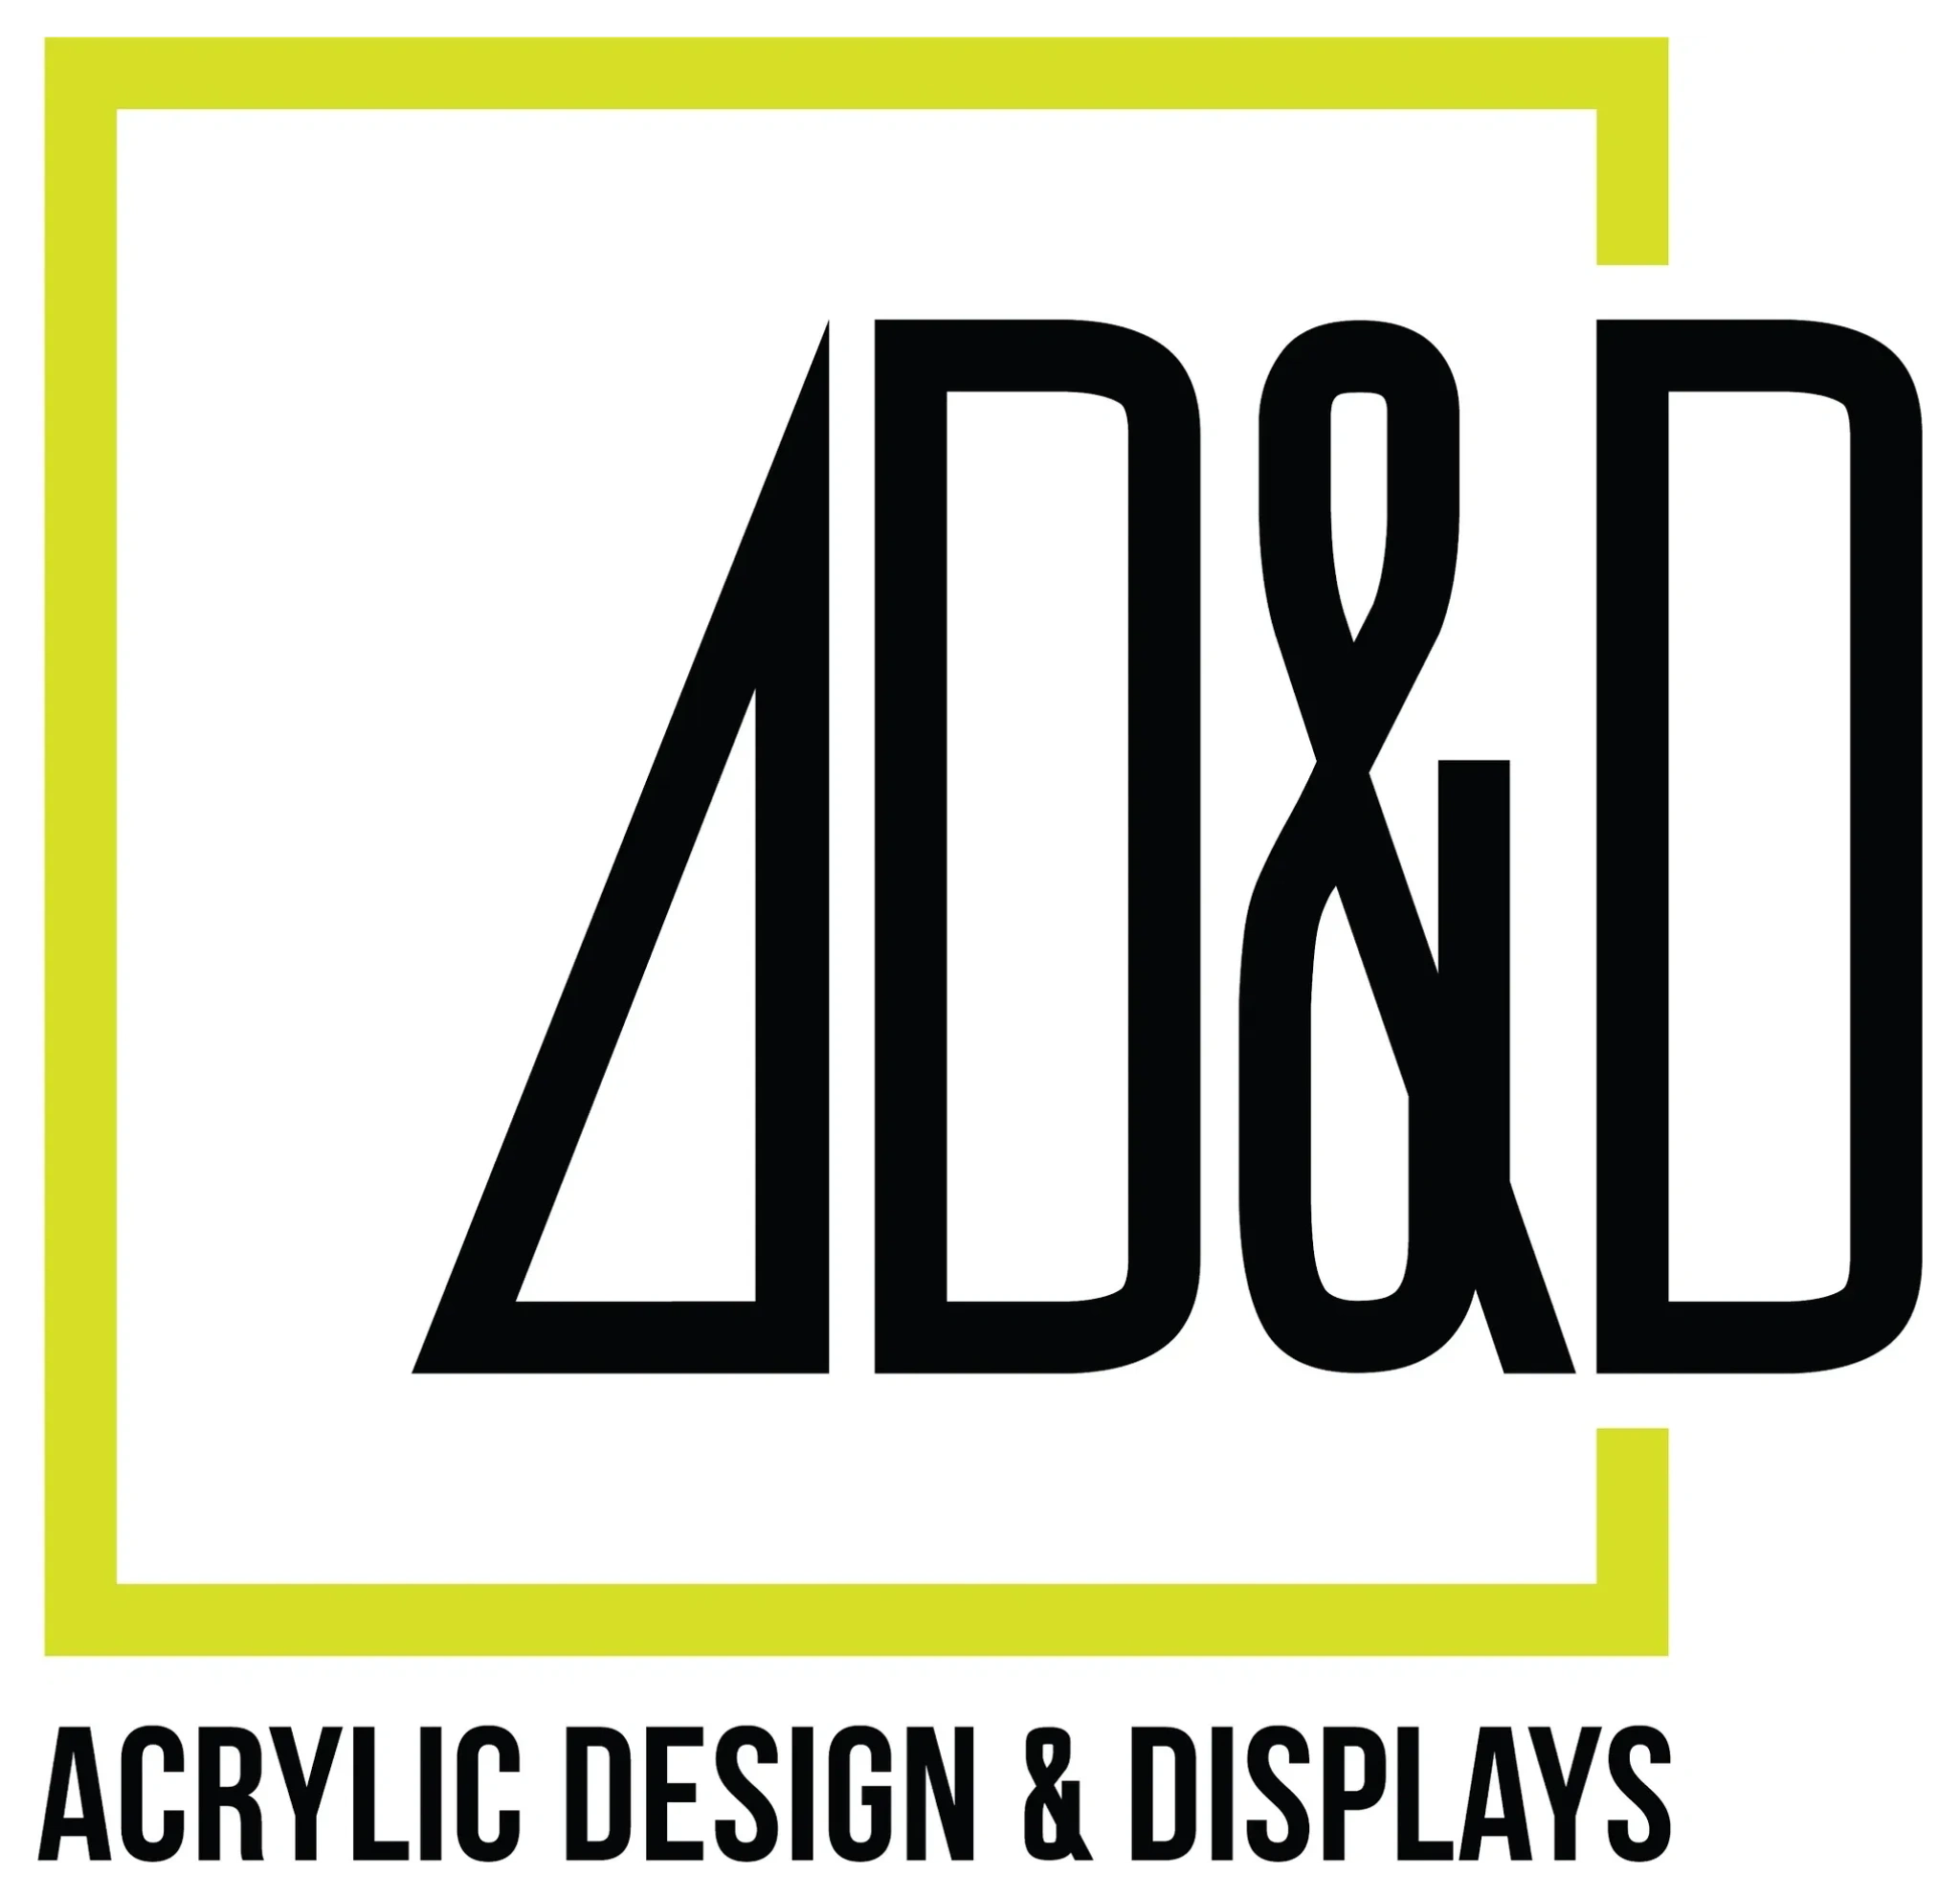 (c) Acrylicdesign.net